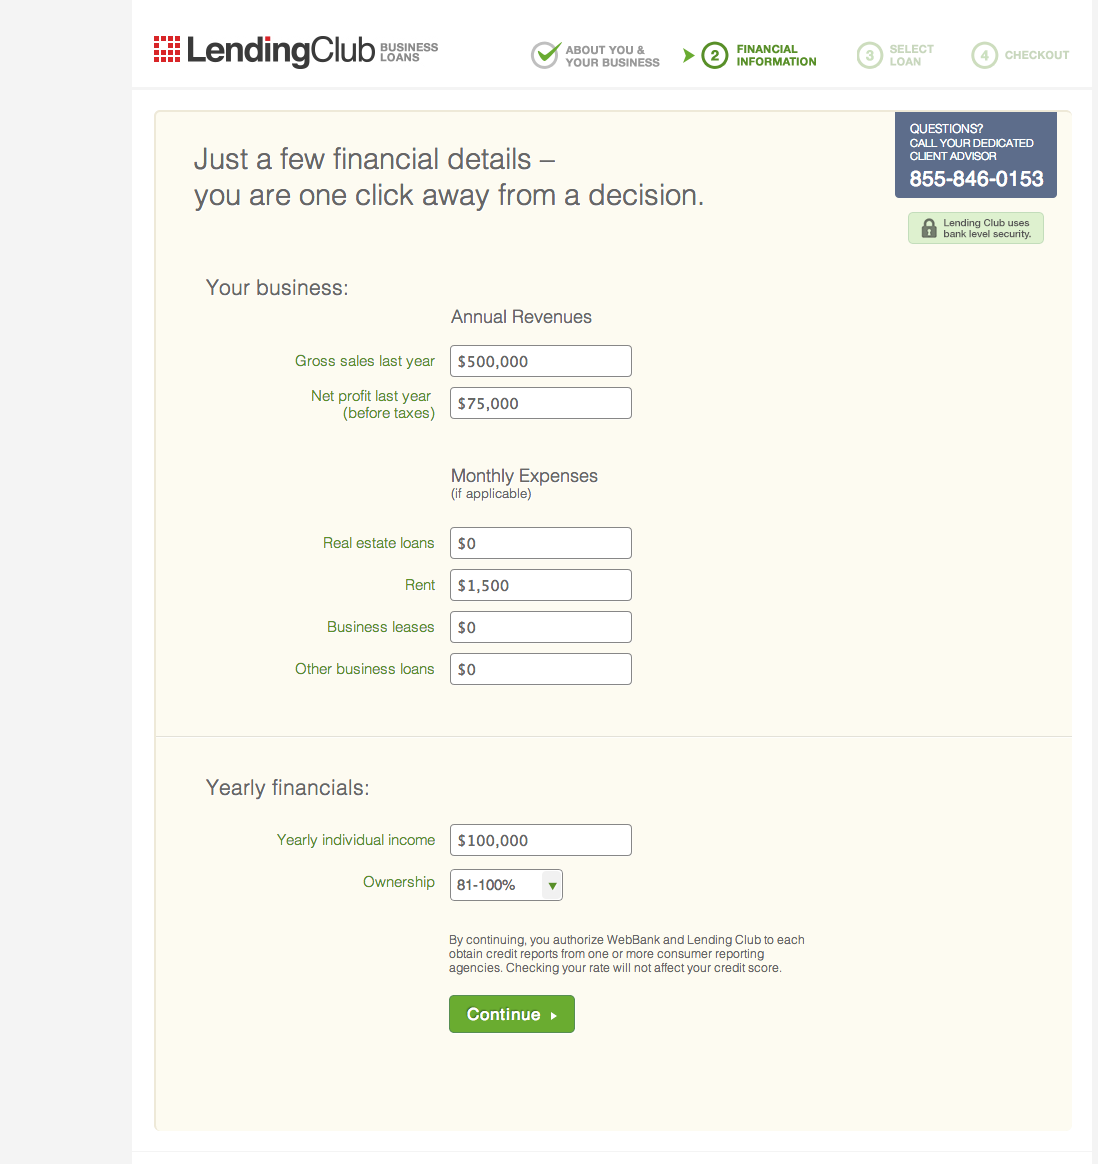 Screenshot of the lendingclub.com application page